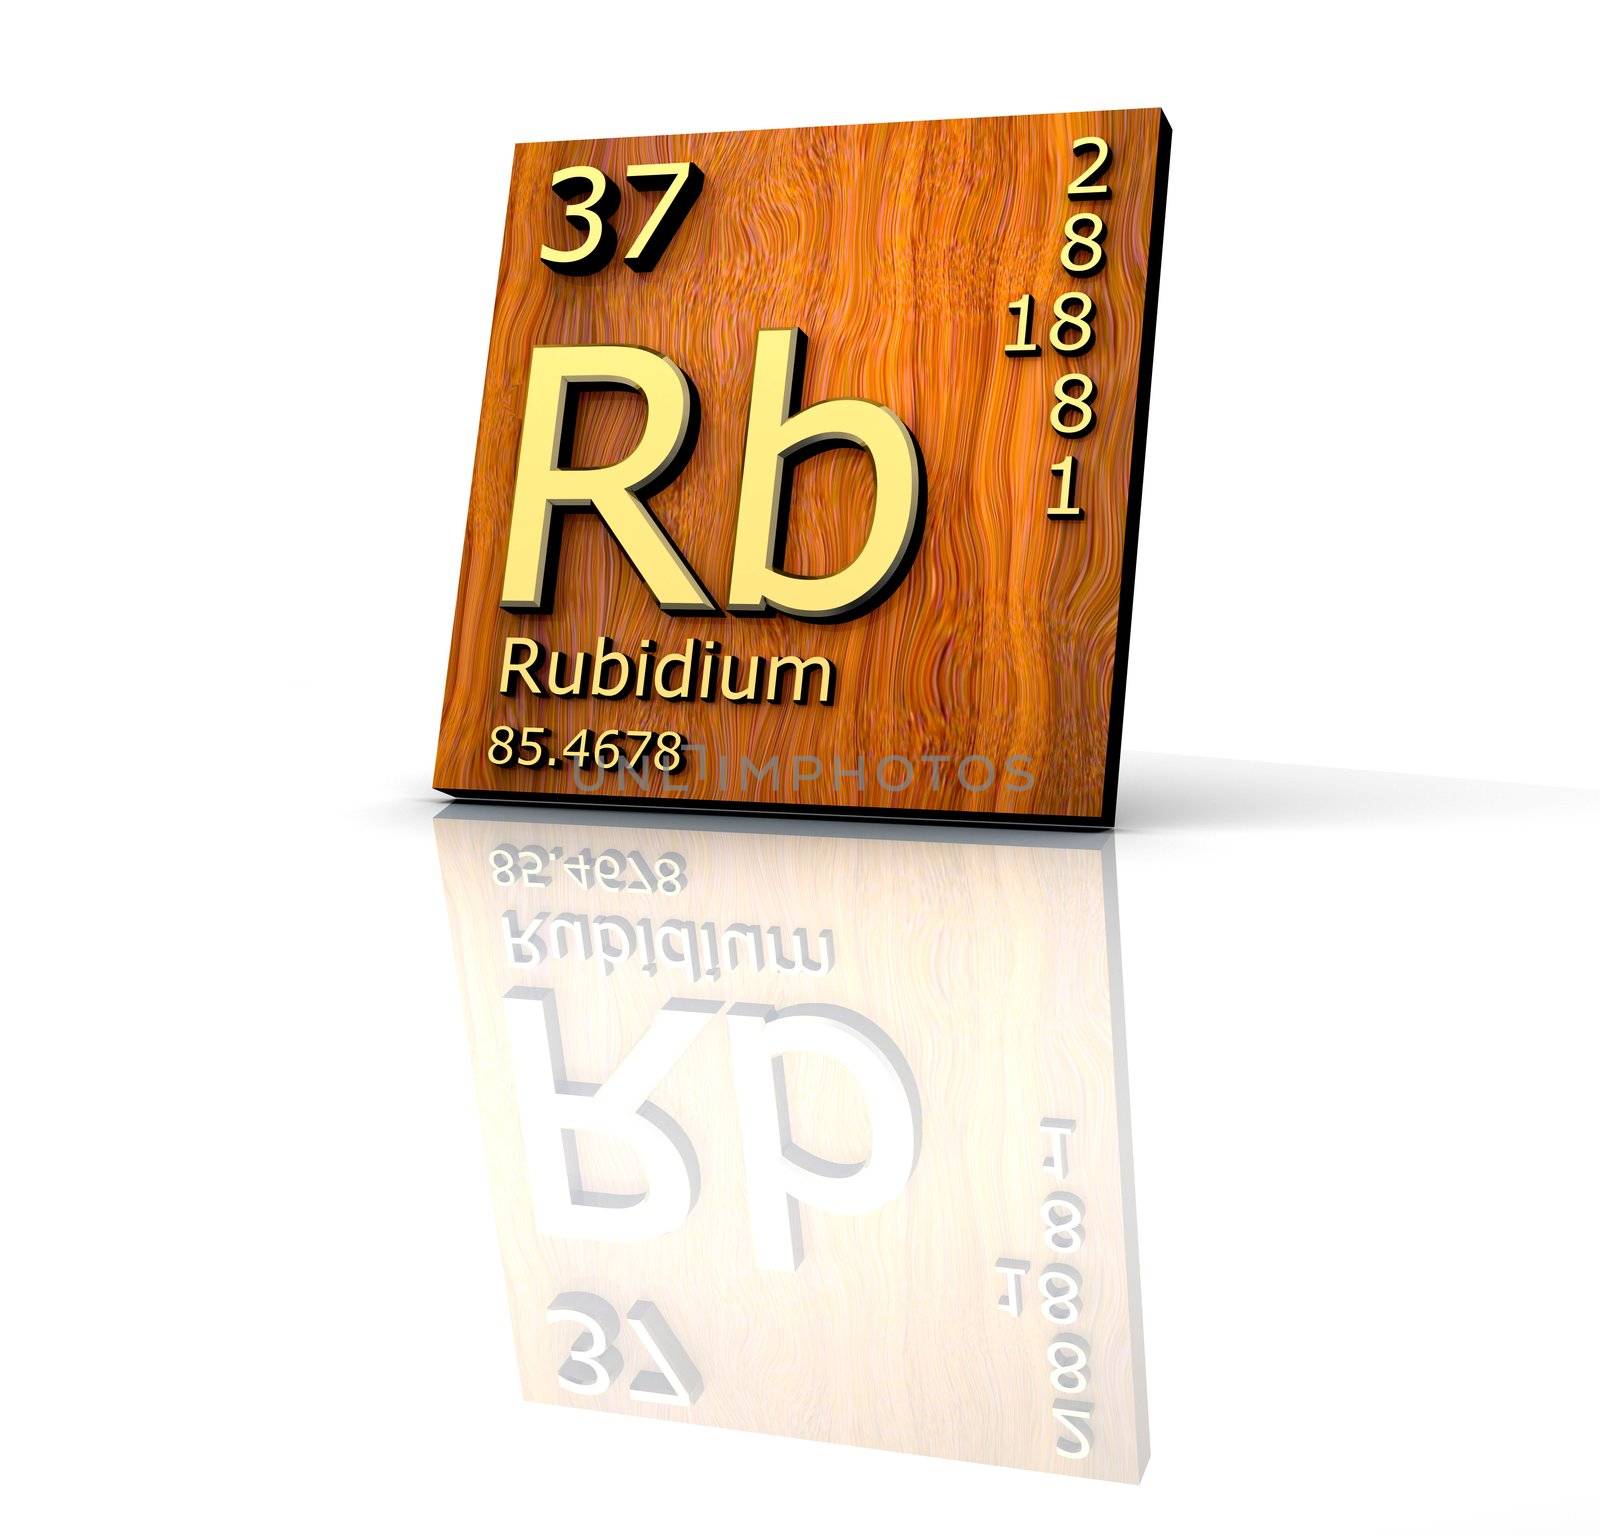 Rubidium form Periodic Table of Elements  - wood board - 3d made